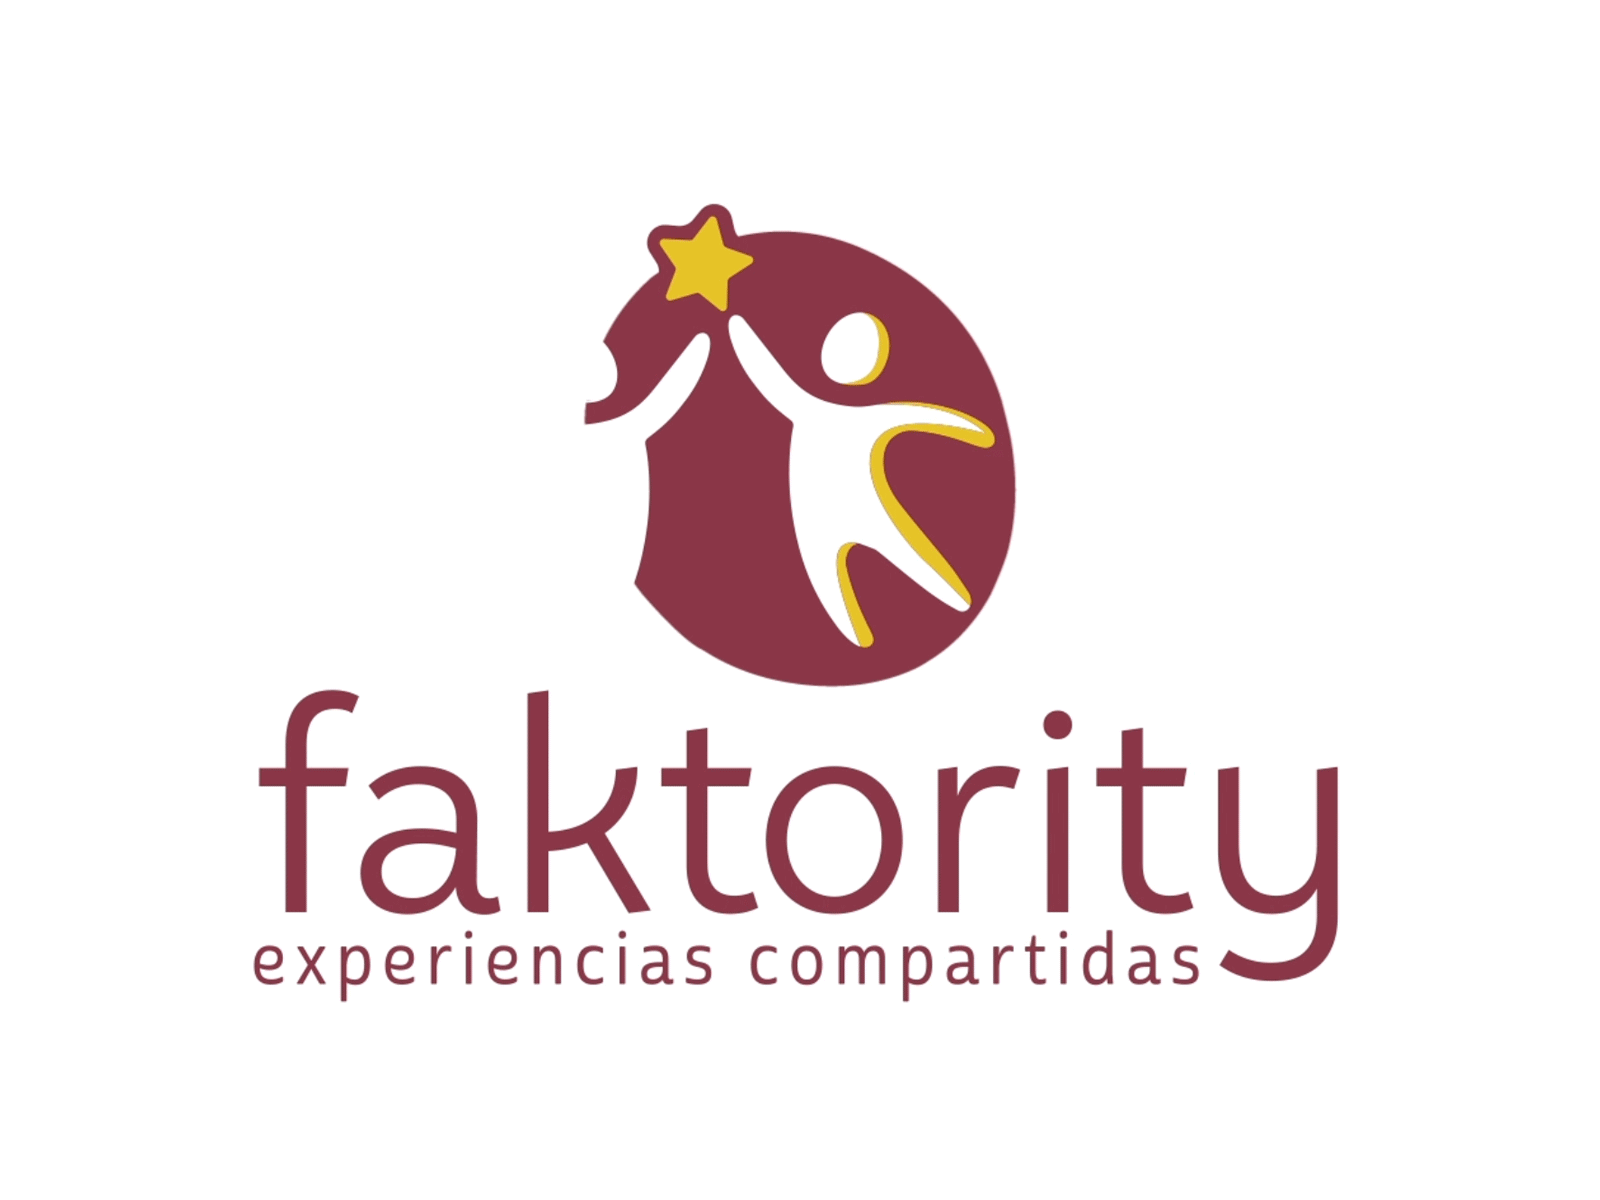 Faktority "Sharing experiences" Branding